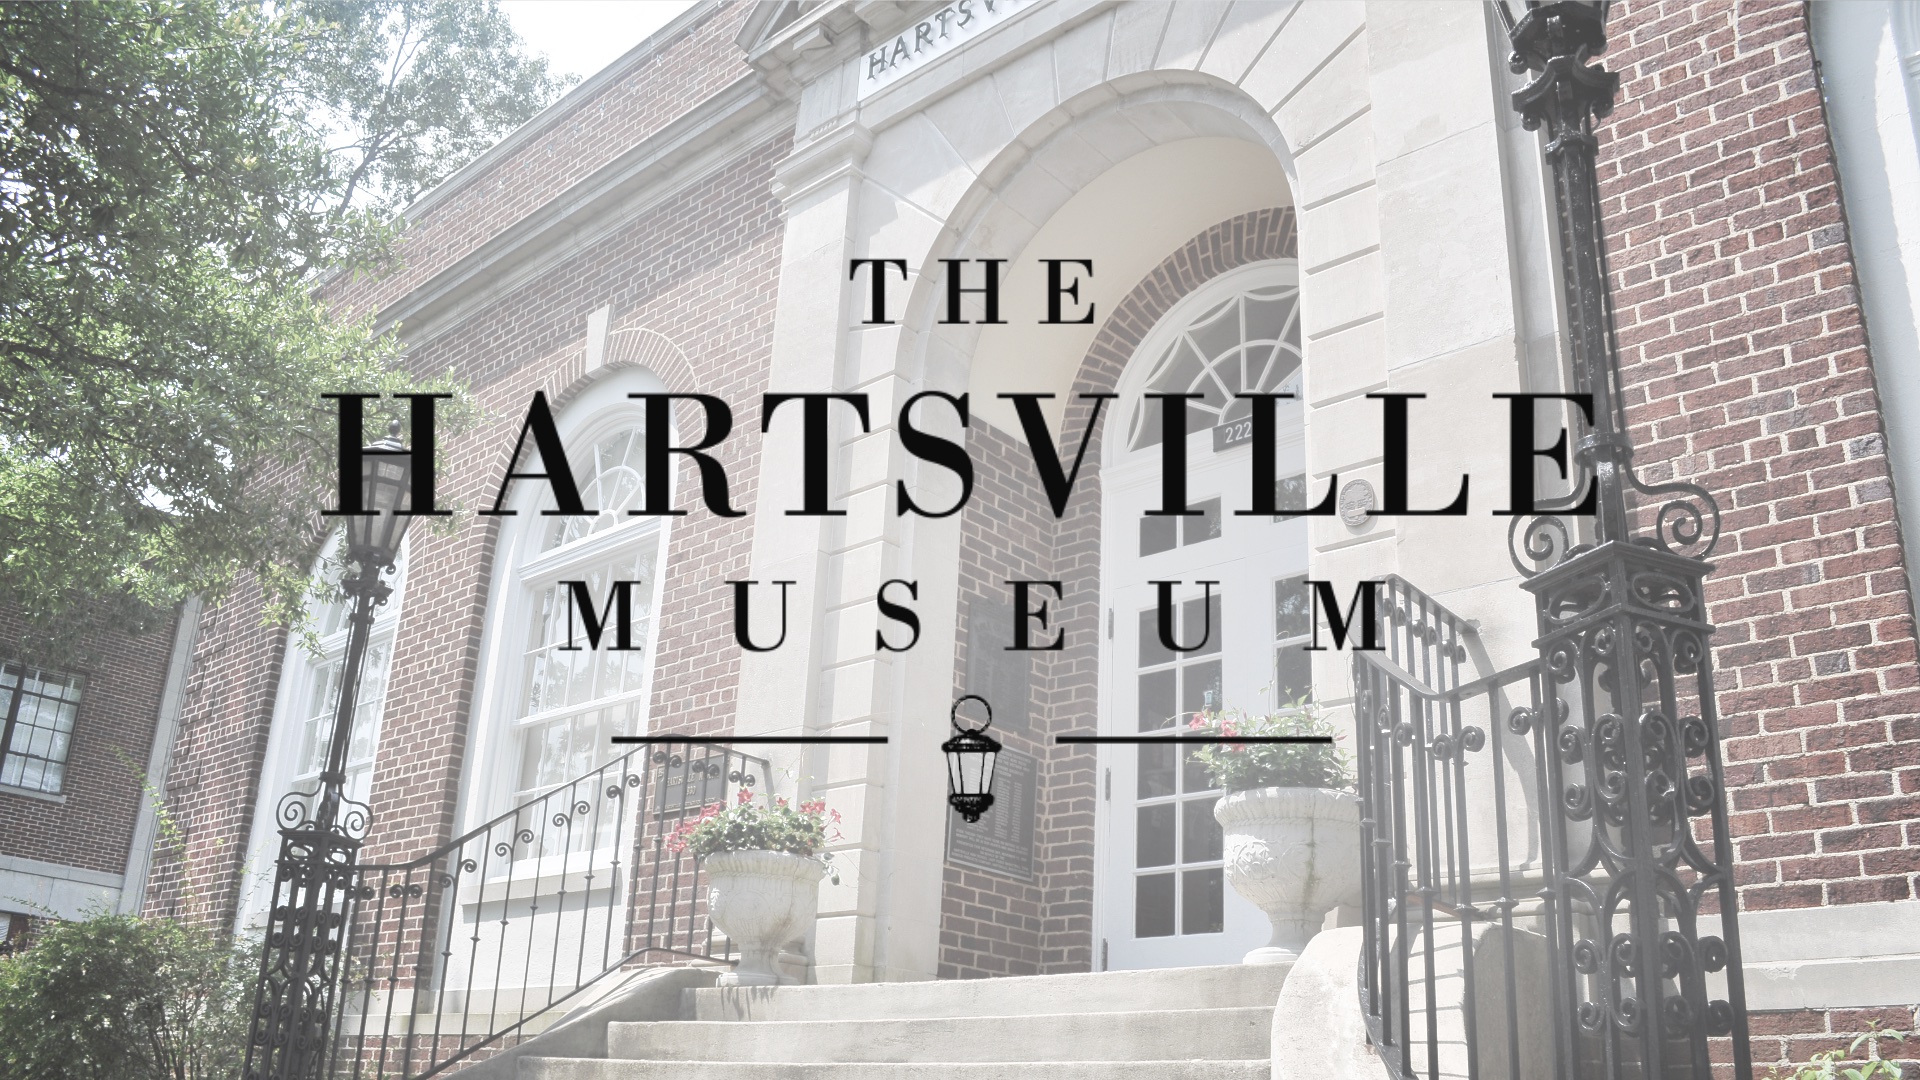 The Hartsville Museum facade and logo.